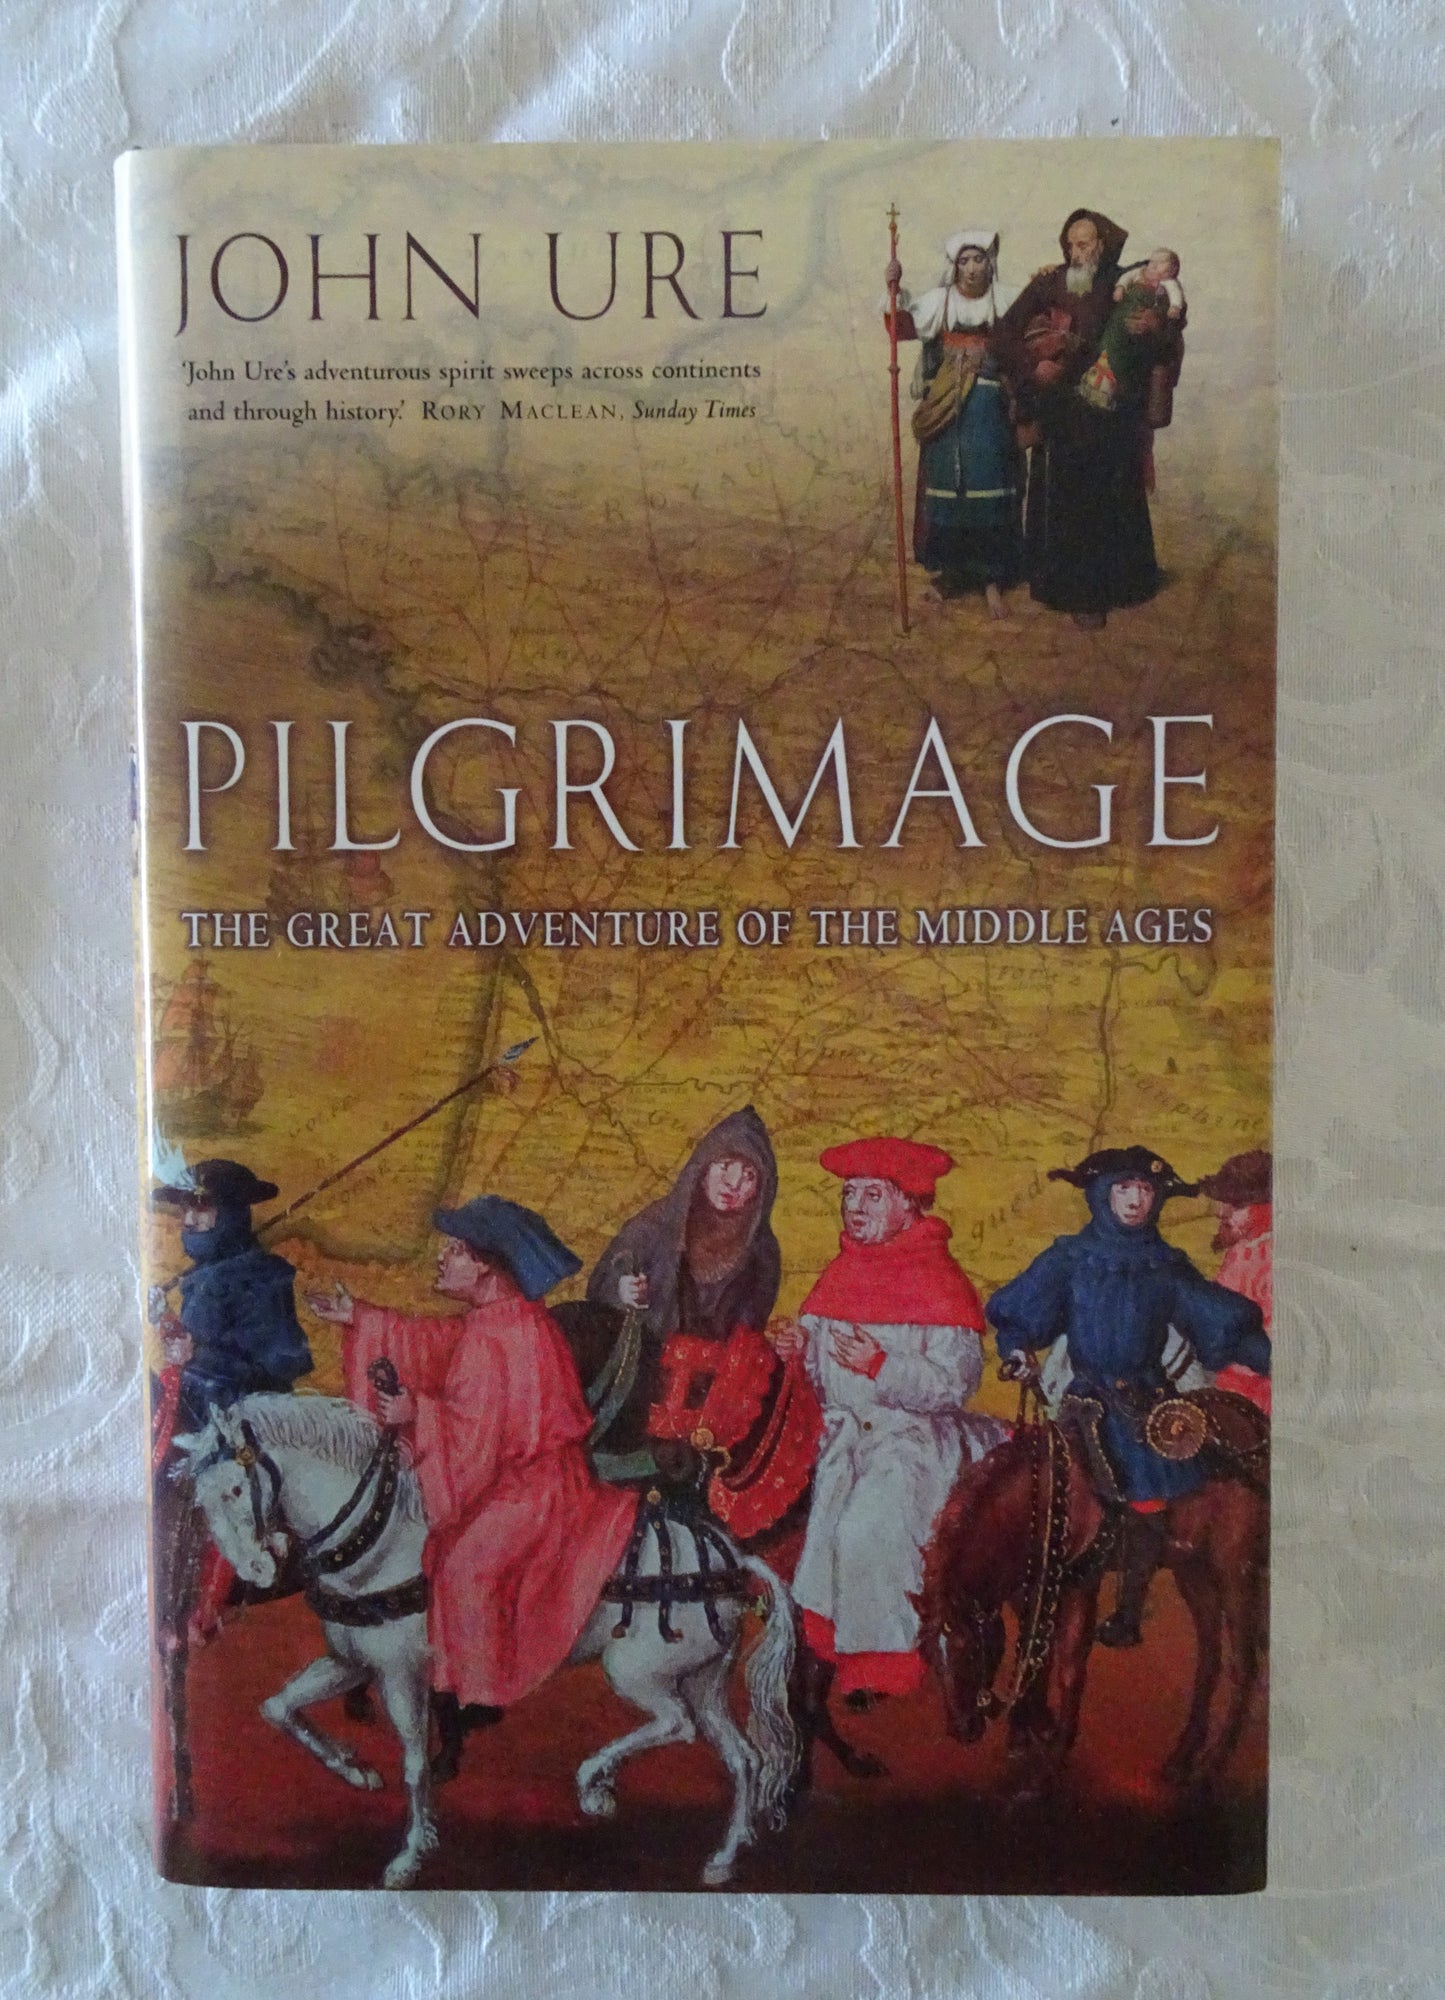 Pilgrimage by John Ure